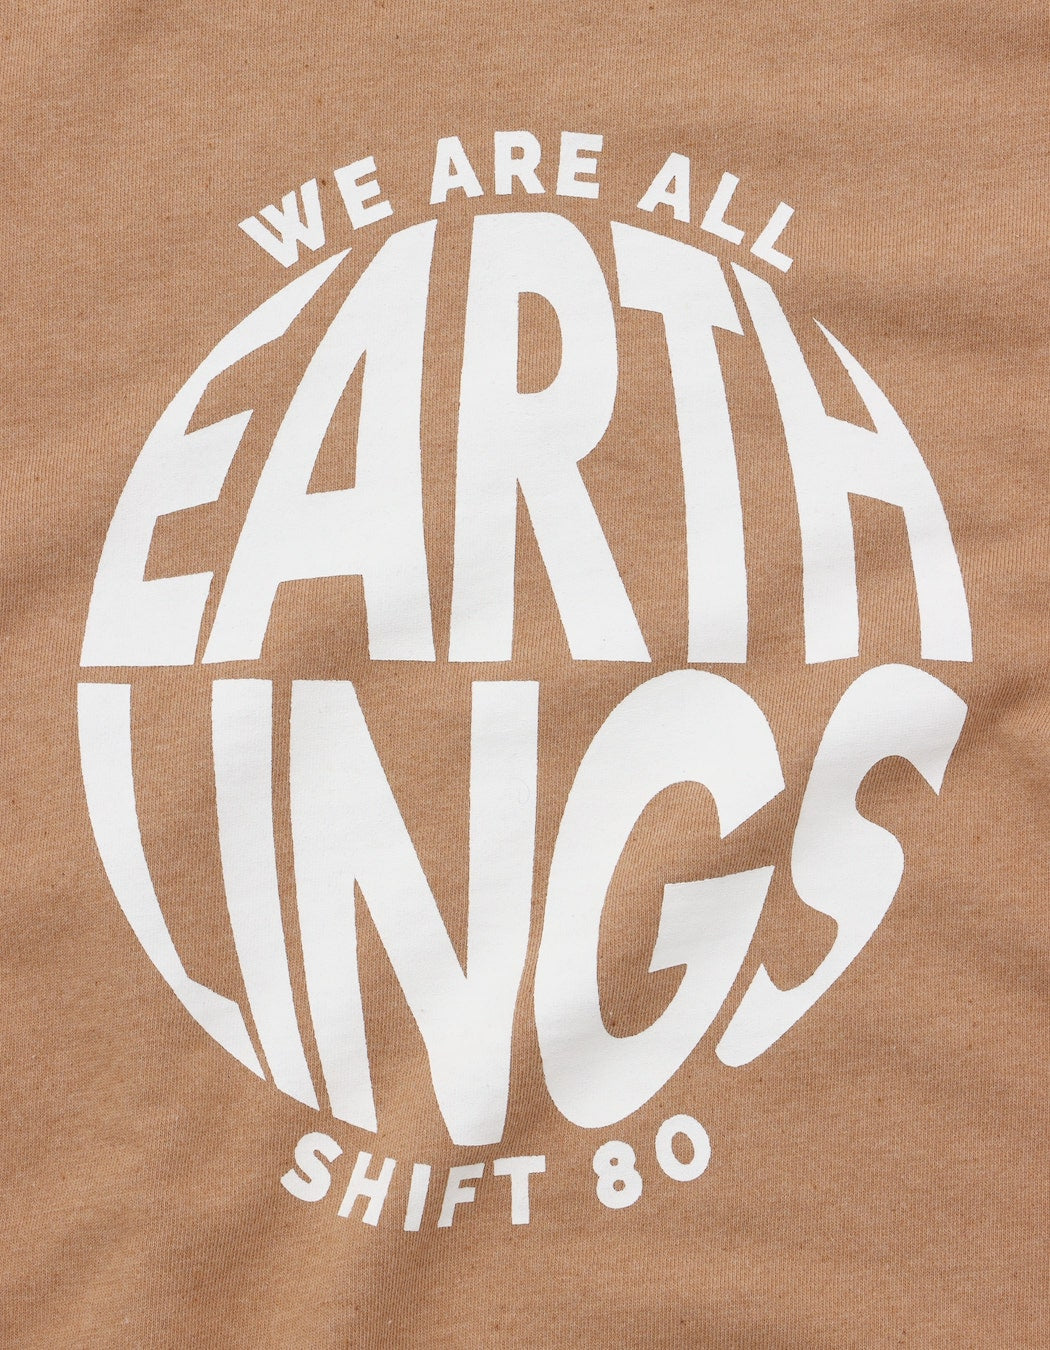 earthlingオーガニックコットン、シャツ新品 - Tシャツ